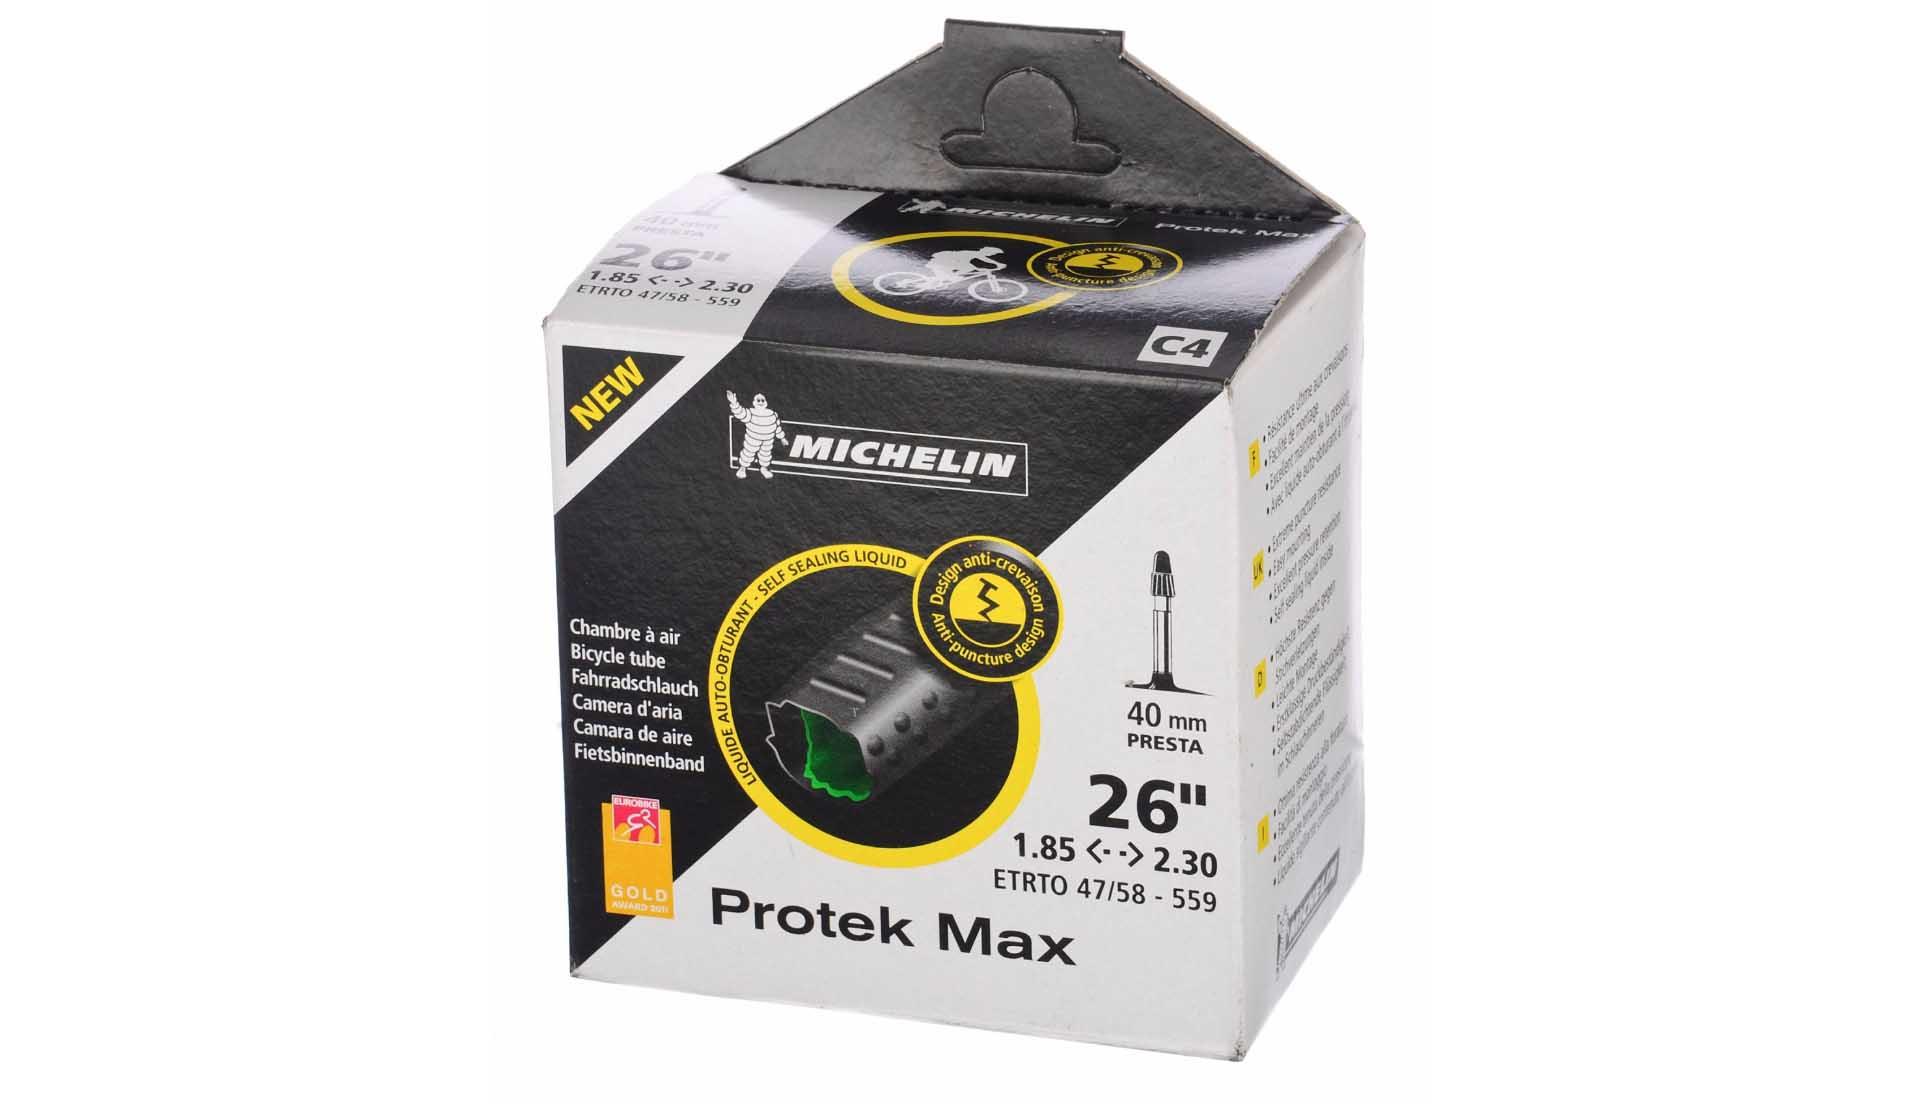 Michelin C4 Protek Max Mtb Tube - Black